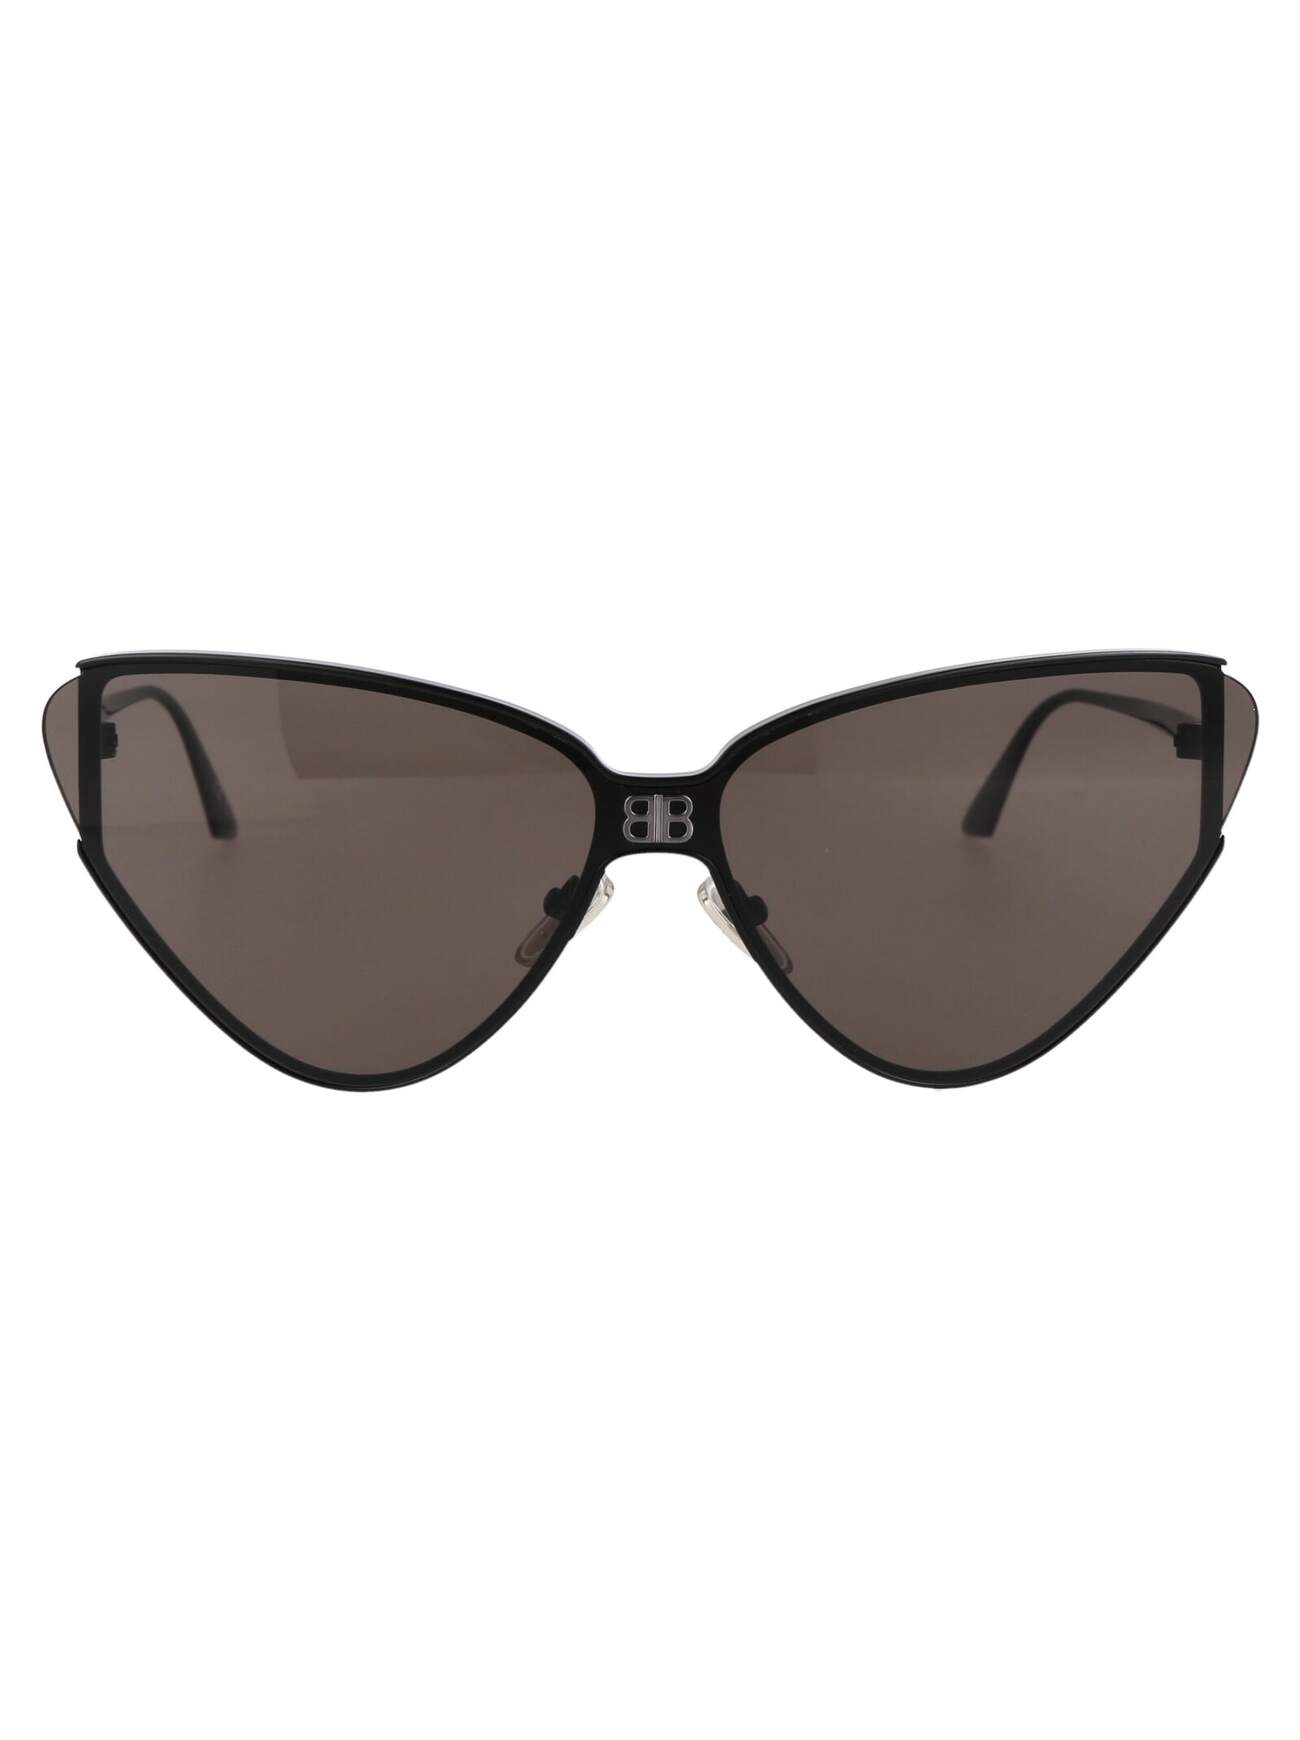 Balenciaga Eyewear Bb0191s Sunglasses in black / grey